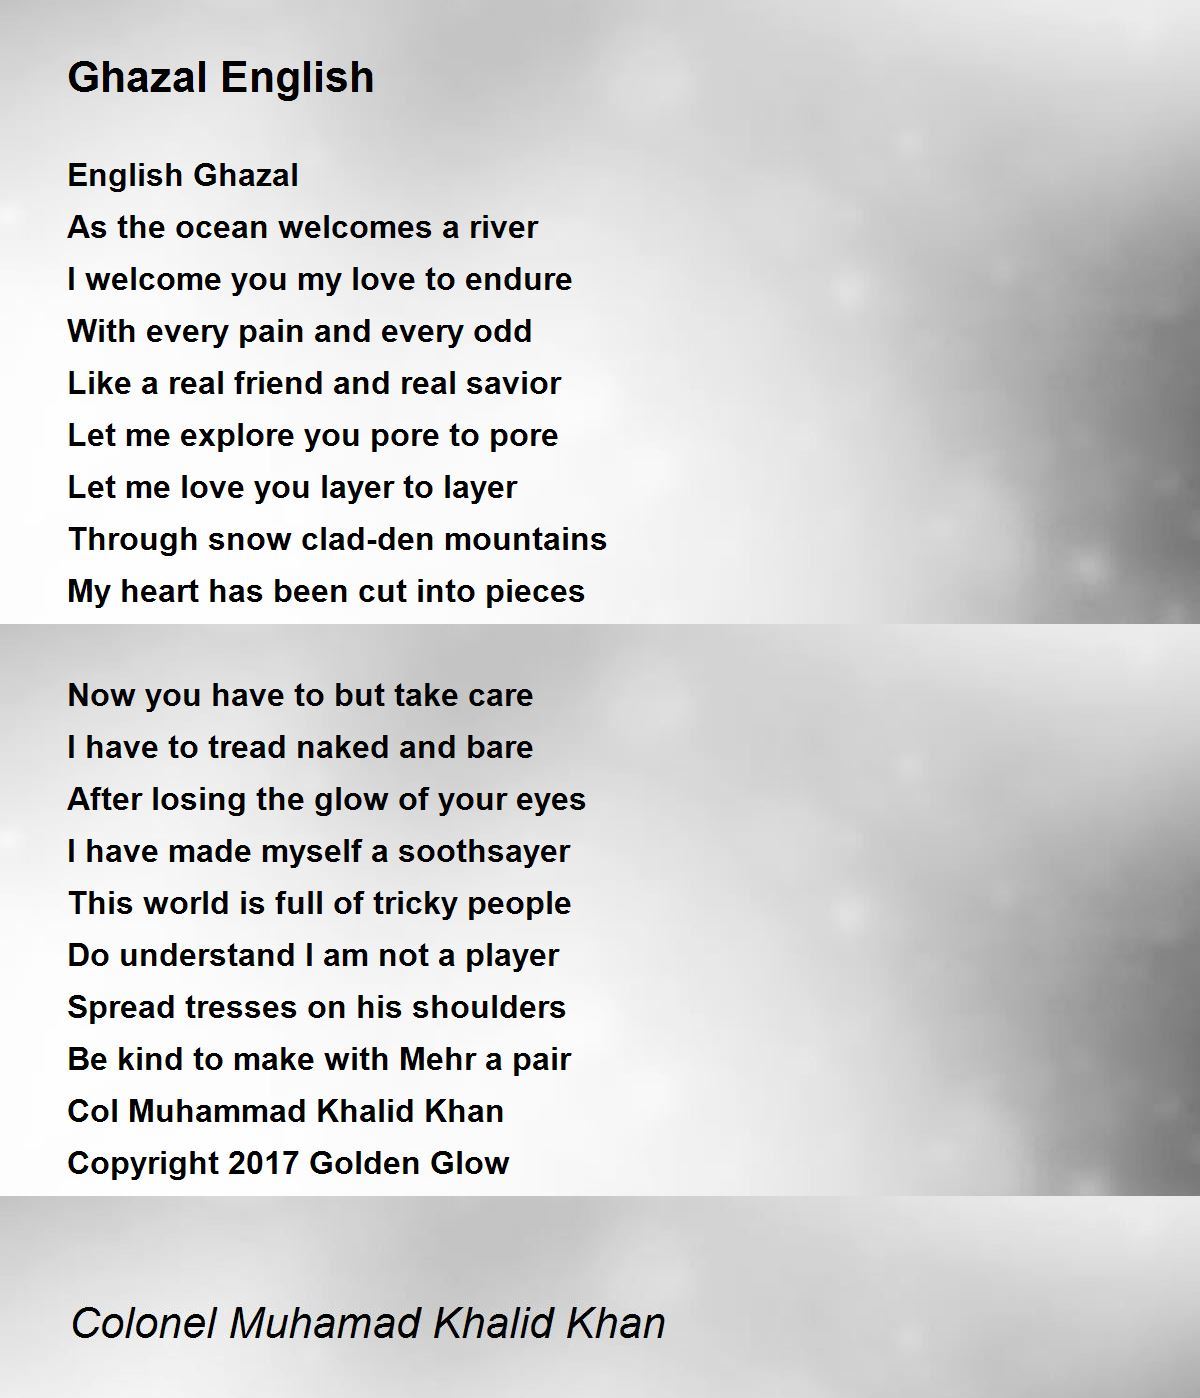 Ghazal English - Ghazal English Poem by Colonel Muhamad Khalid Khan